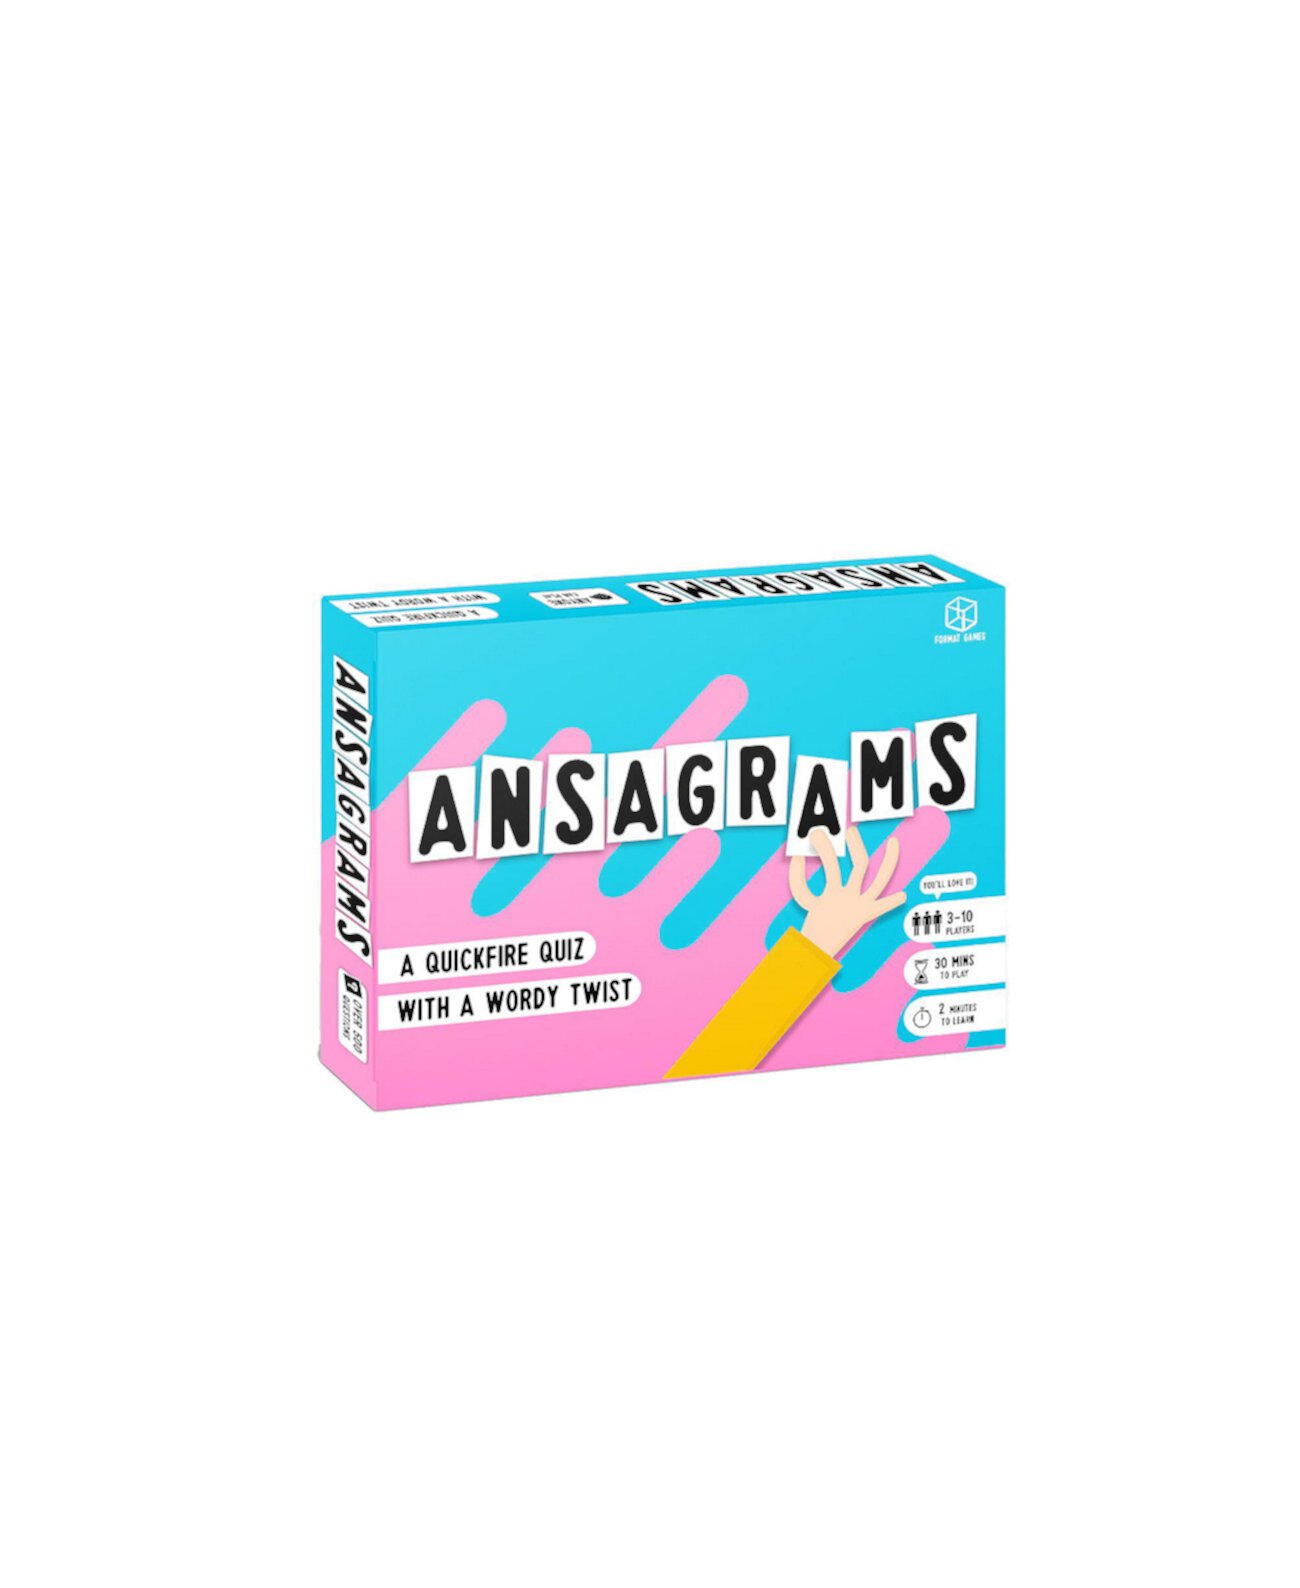 Формат игры Ansagrams Travel Card Game Asmodee North America, Inc.